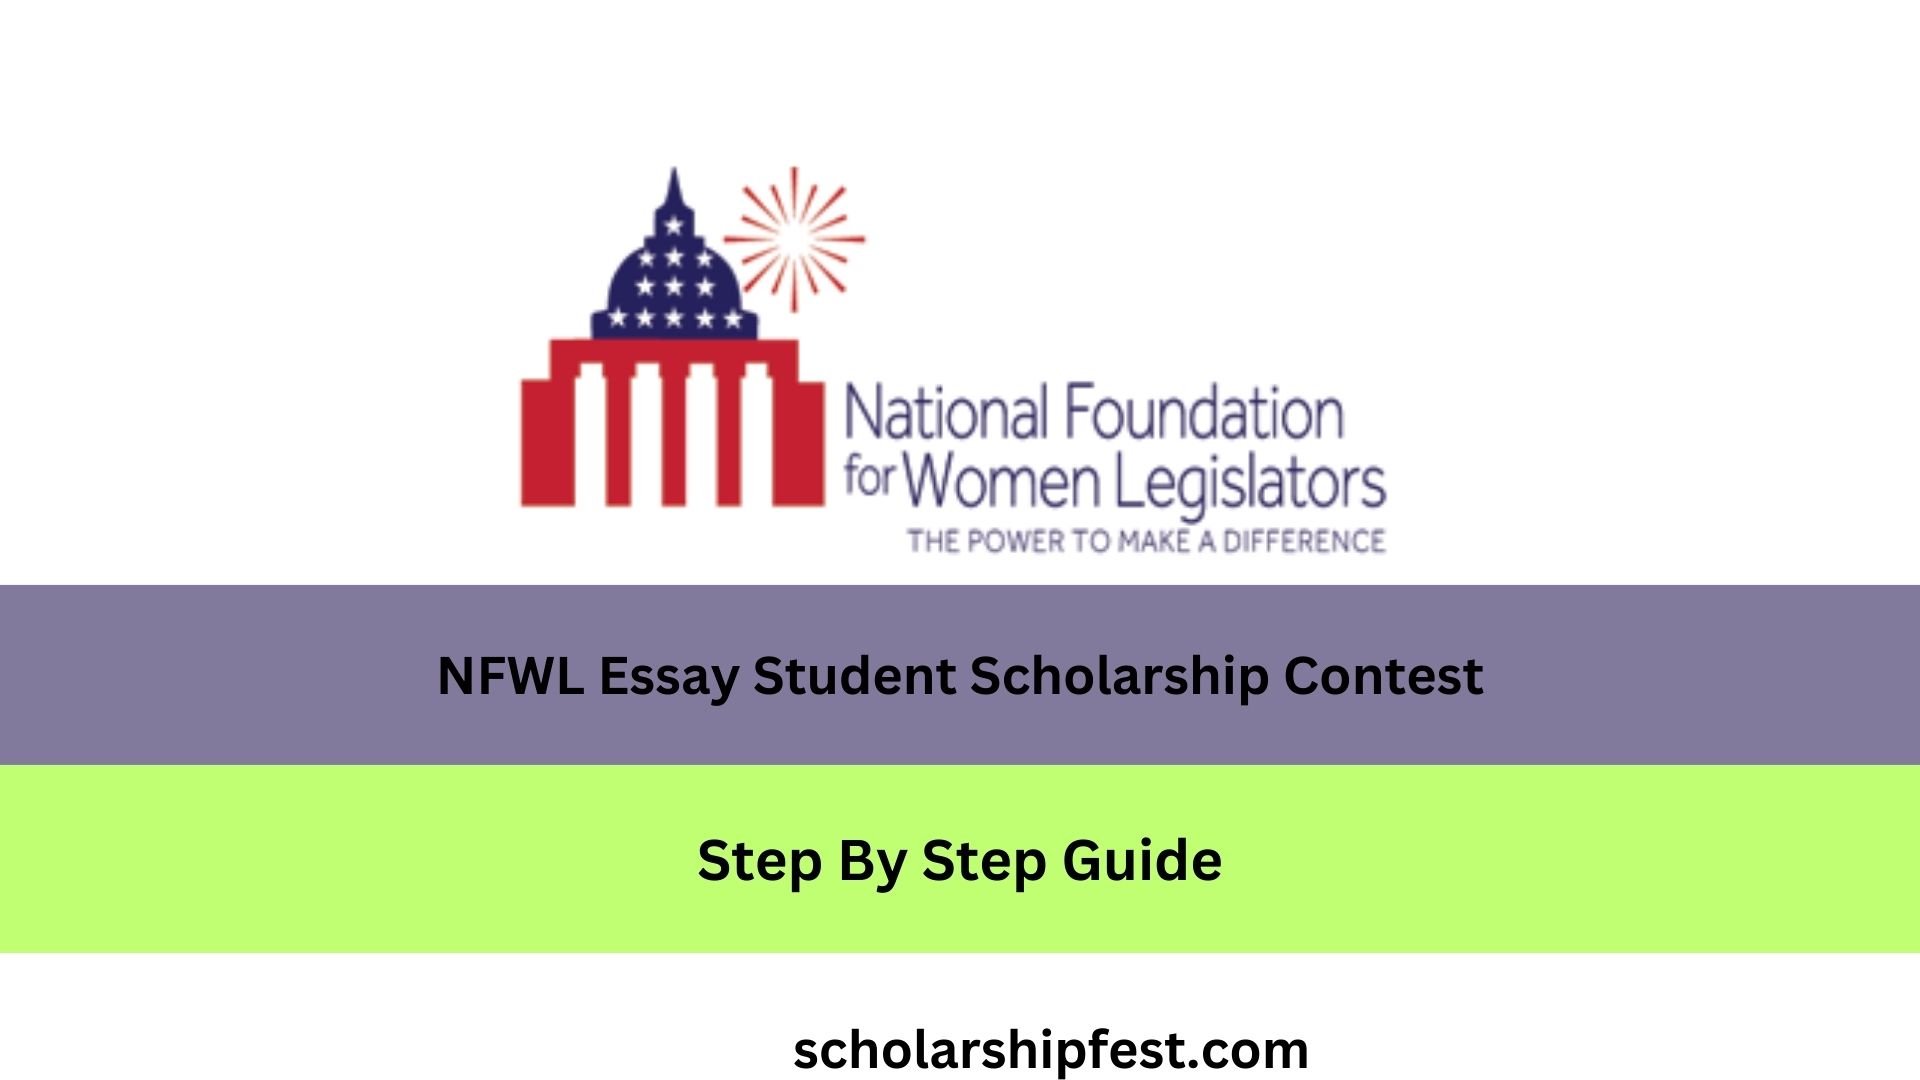 NFWL Essay Student Scholarship Contest